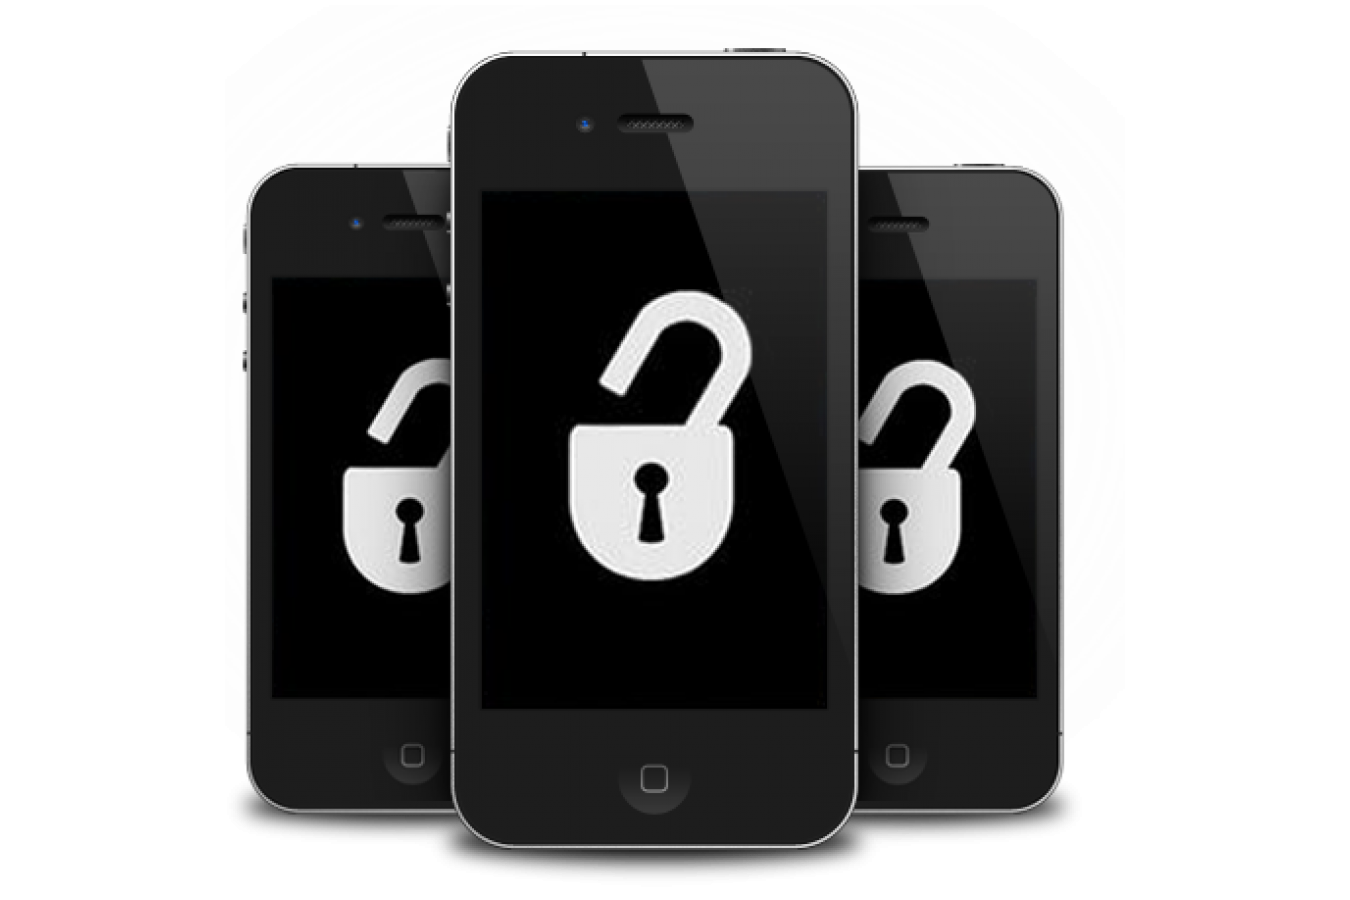 Unlock Mobile Phone